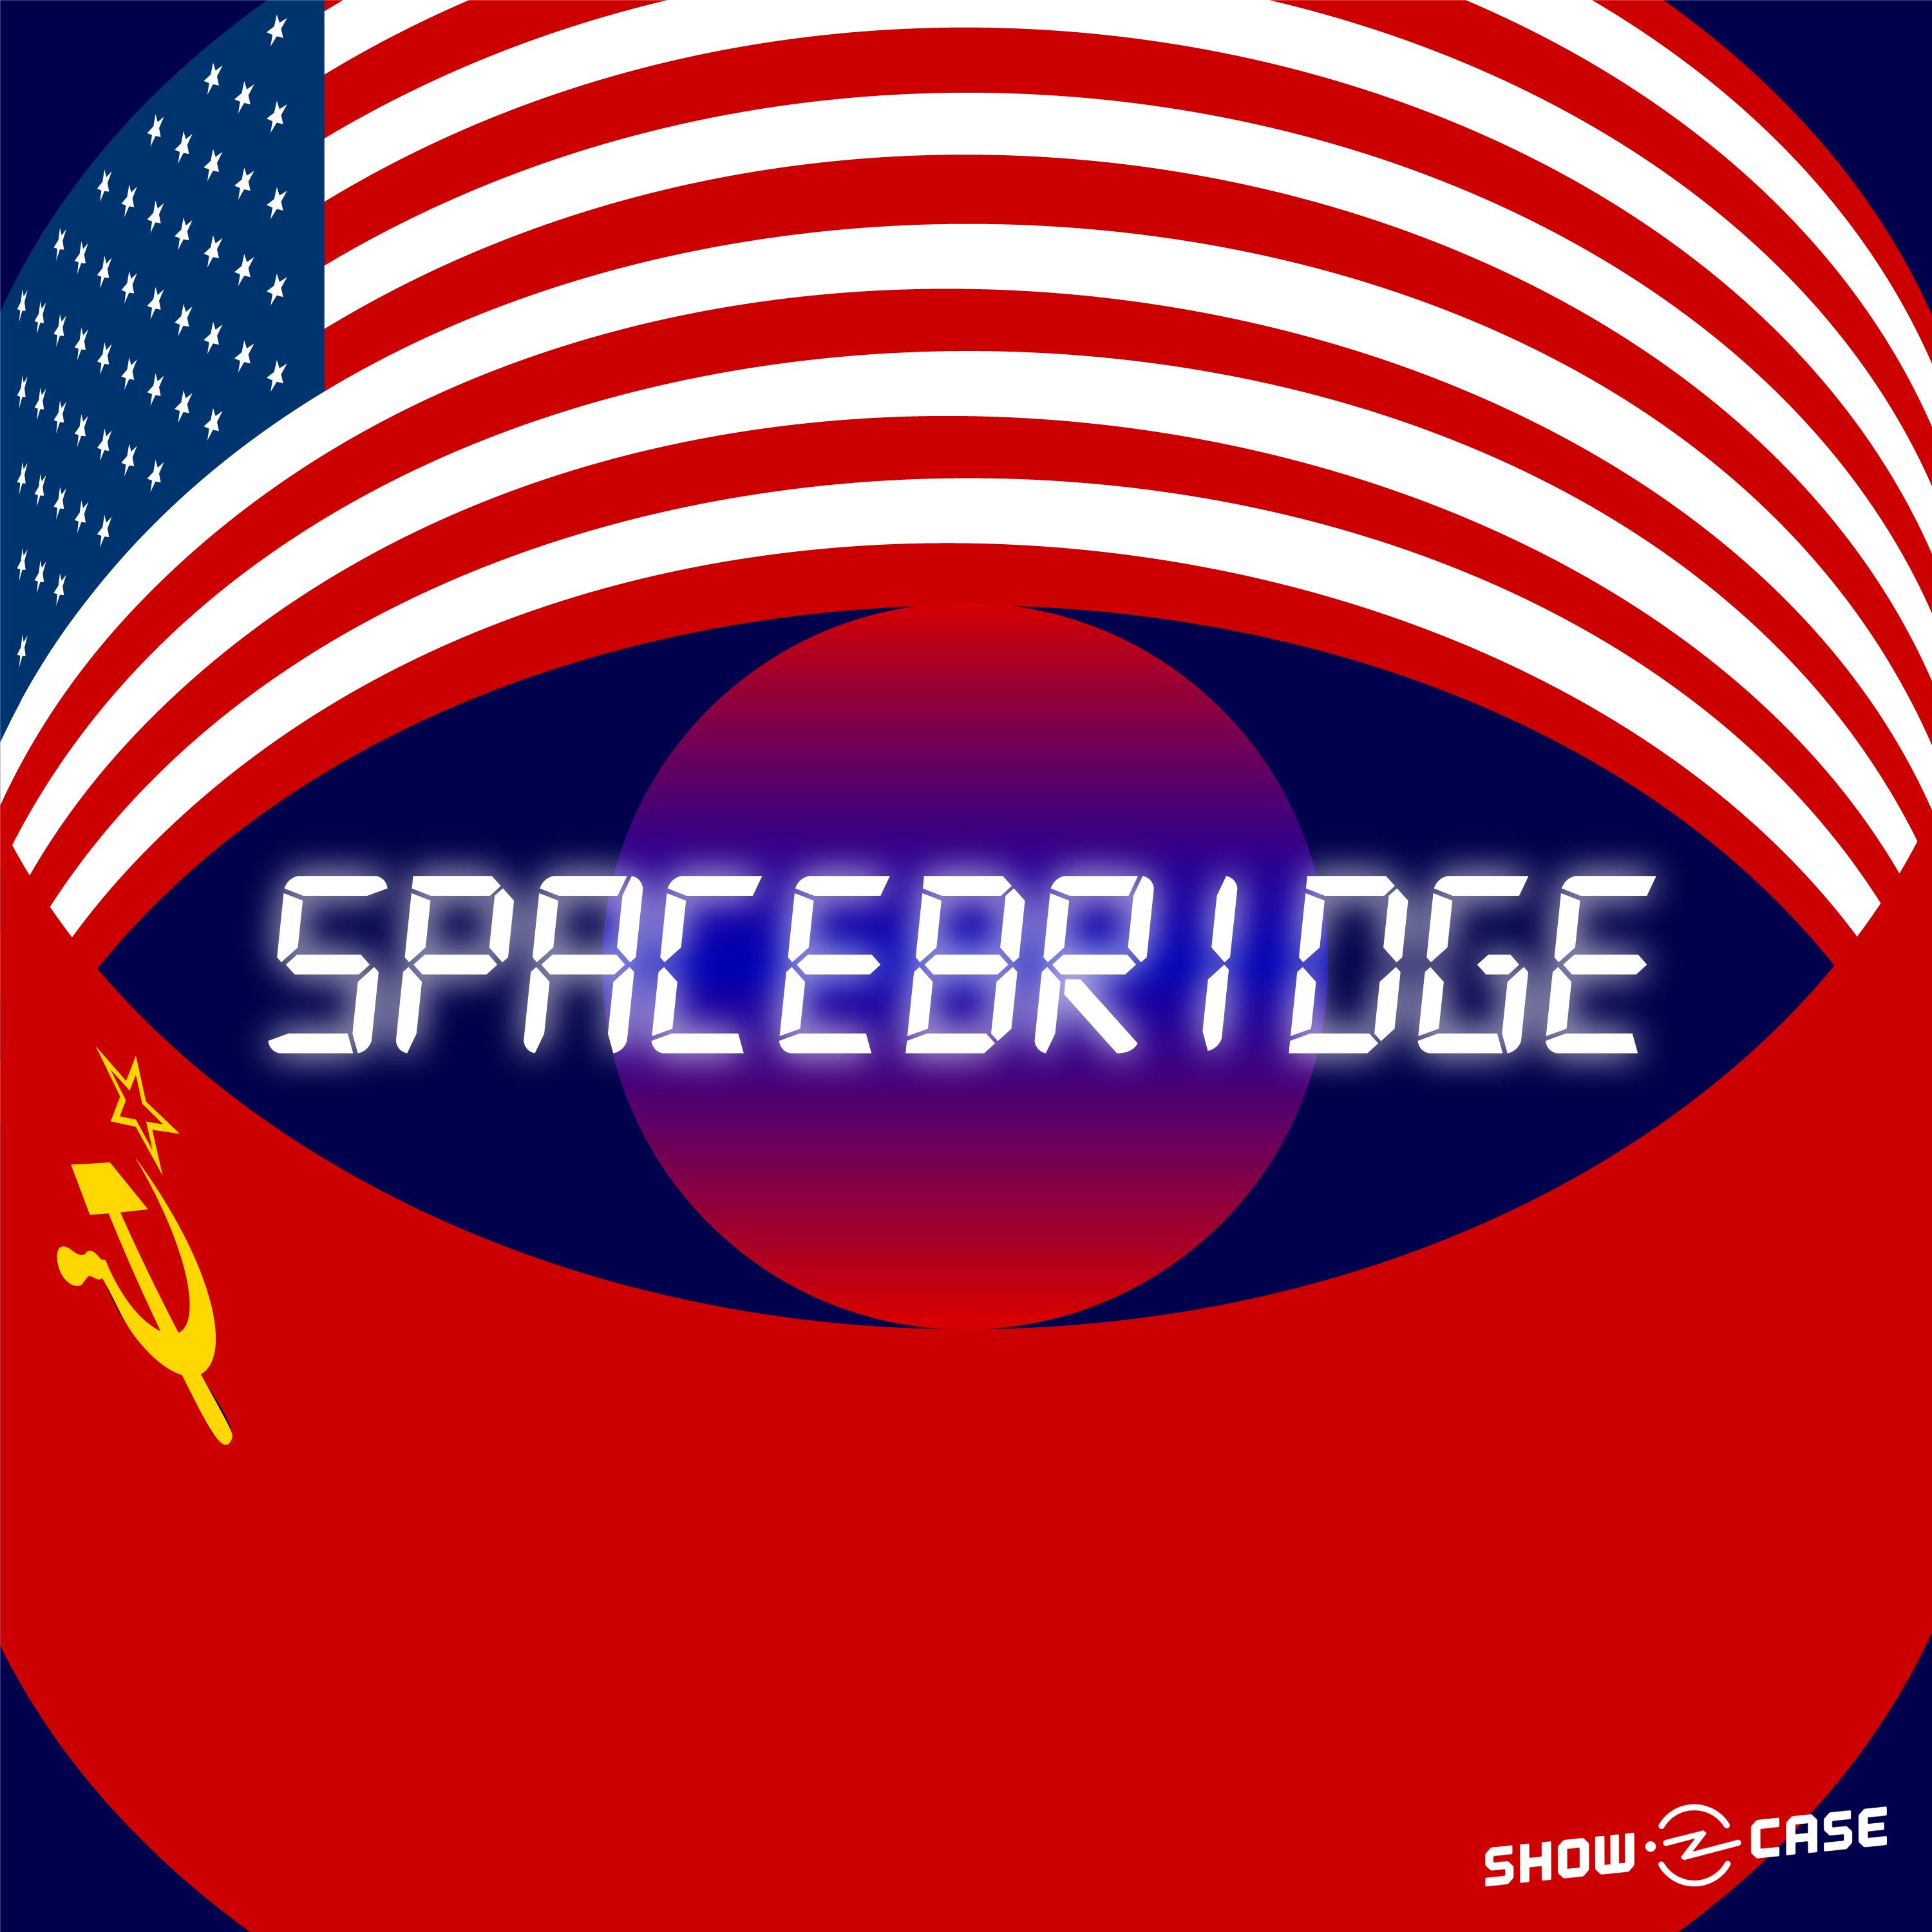 Thumbnail for "Spacebridge #4 – The Fifth Dimension".